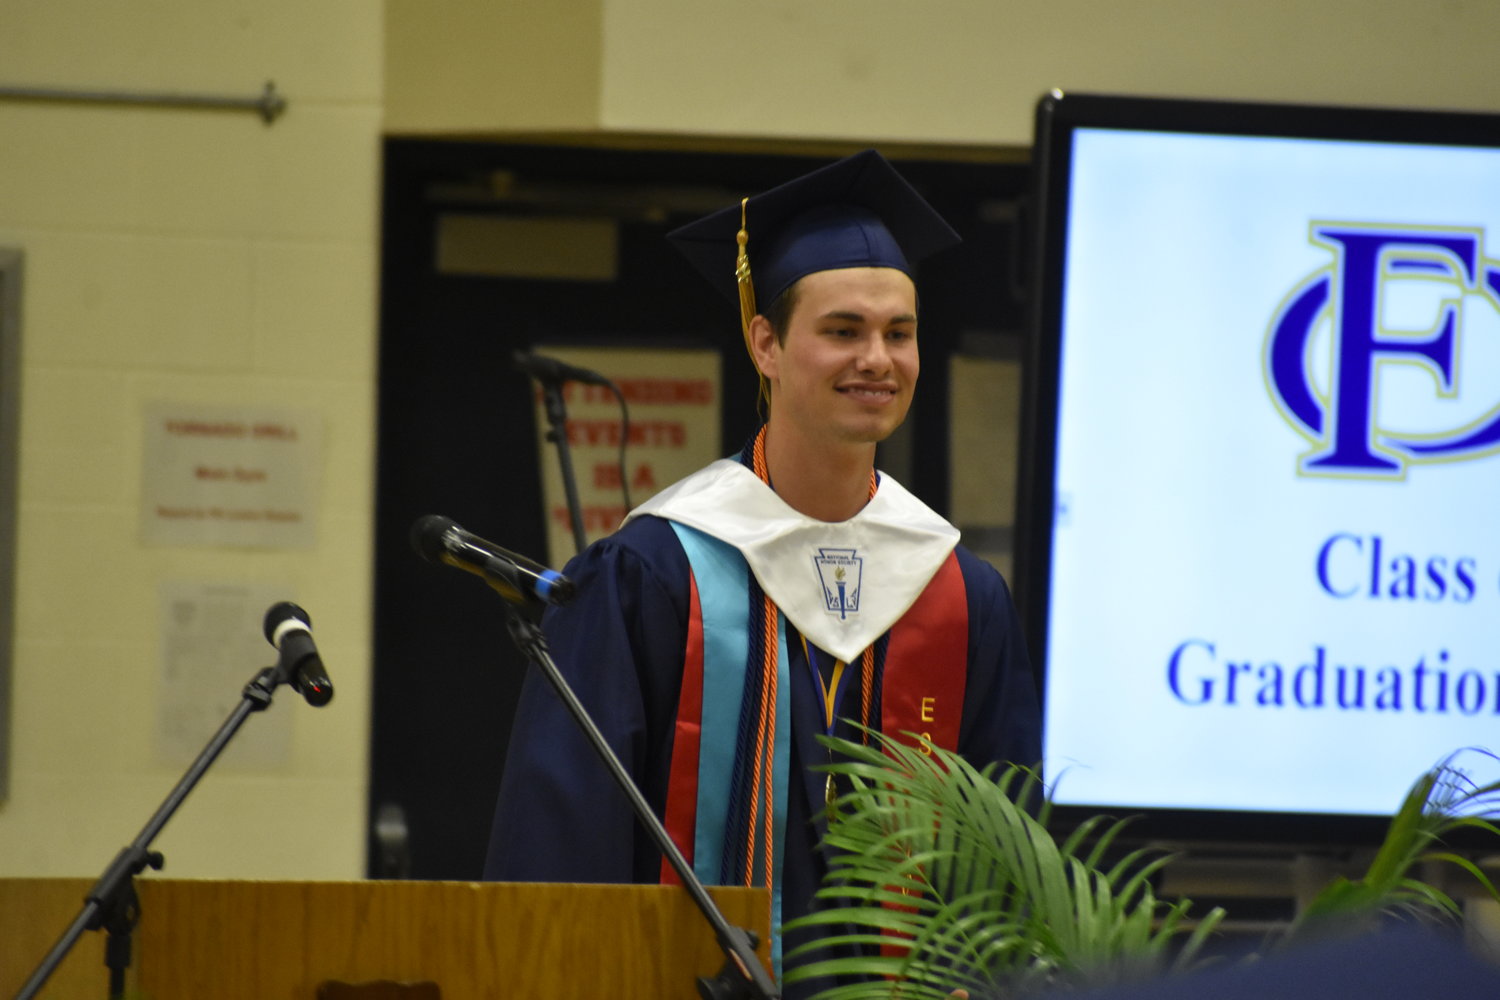 Co-valedictorian Carter Merryman addresses his fellow classmates.